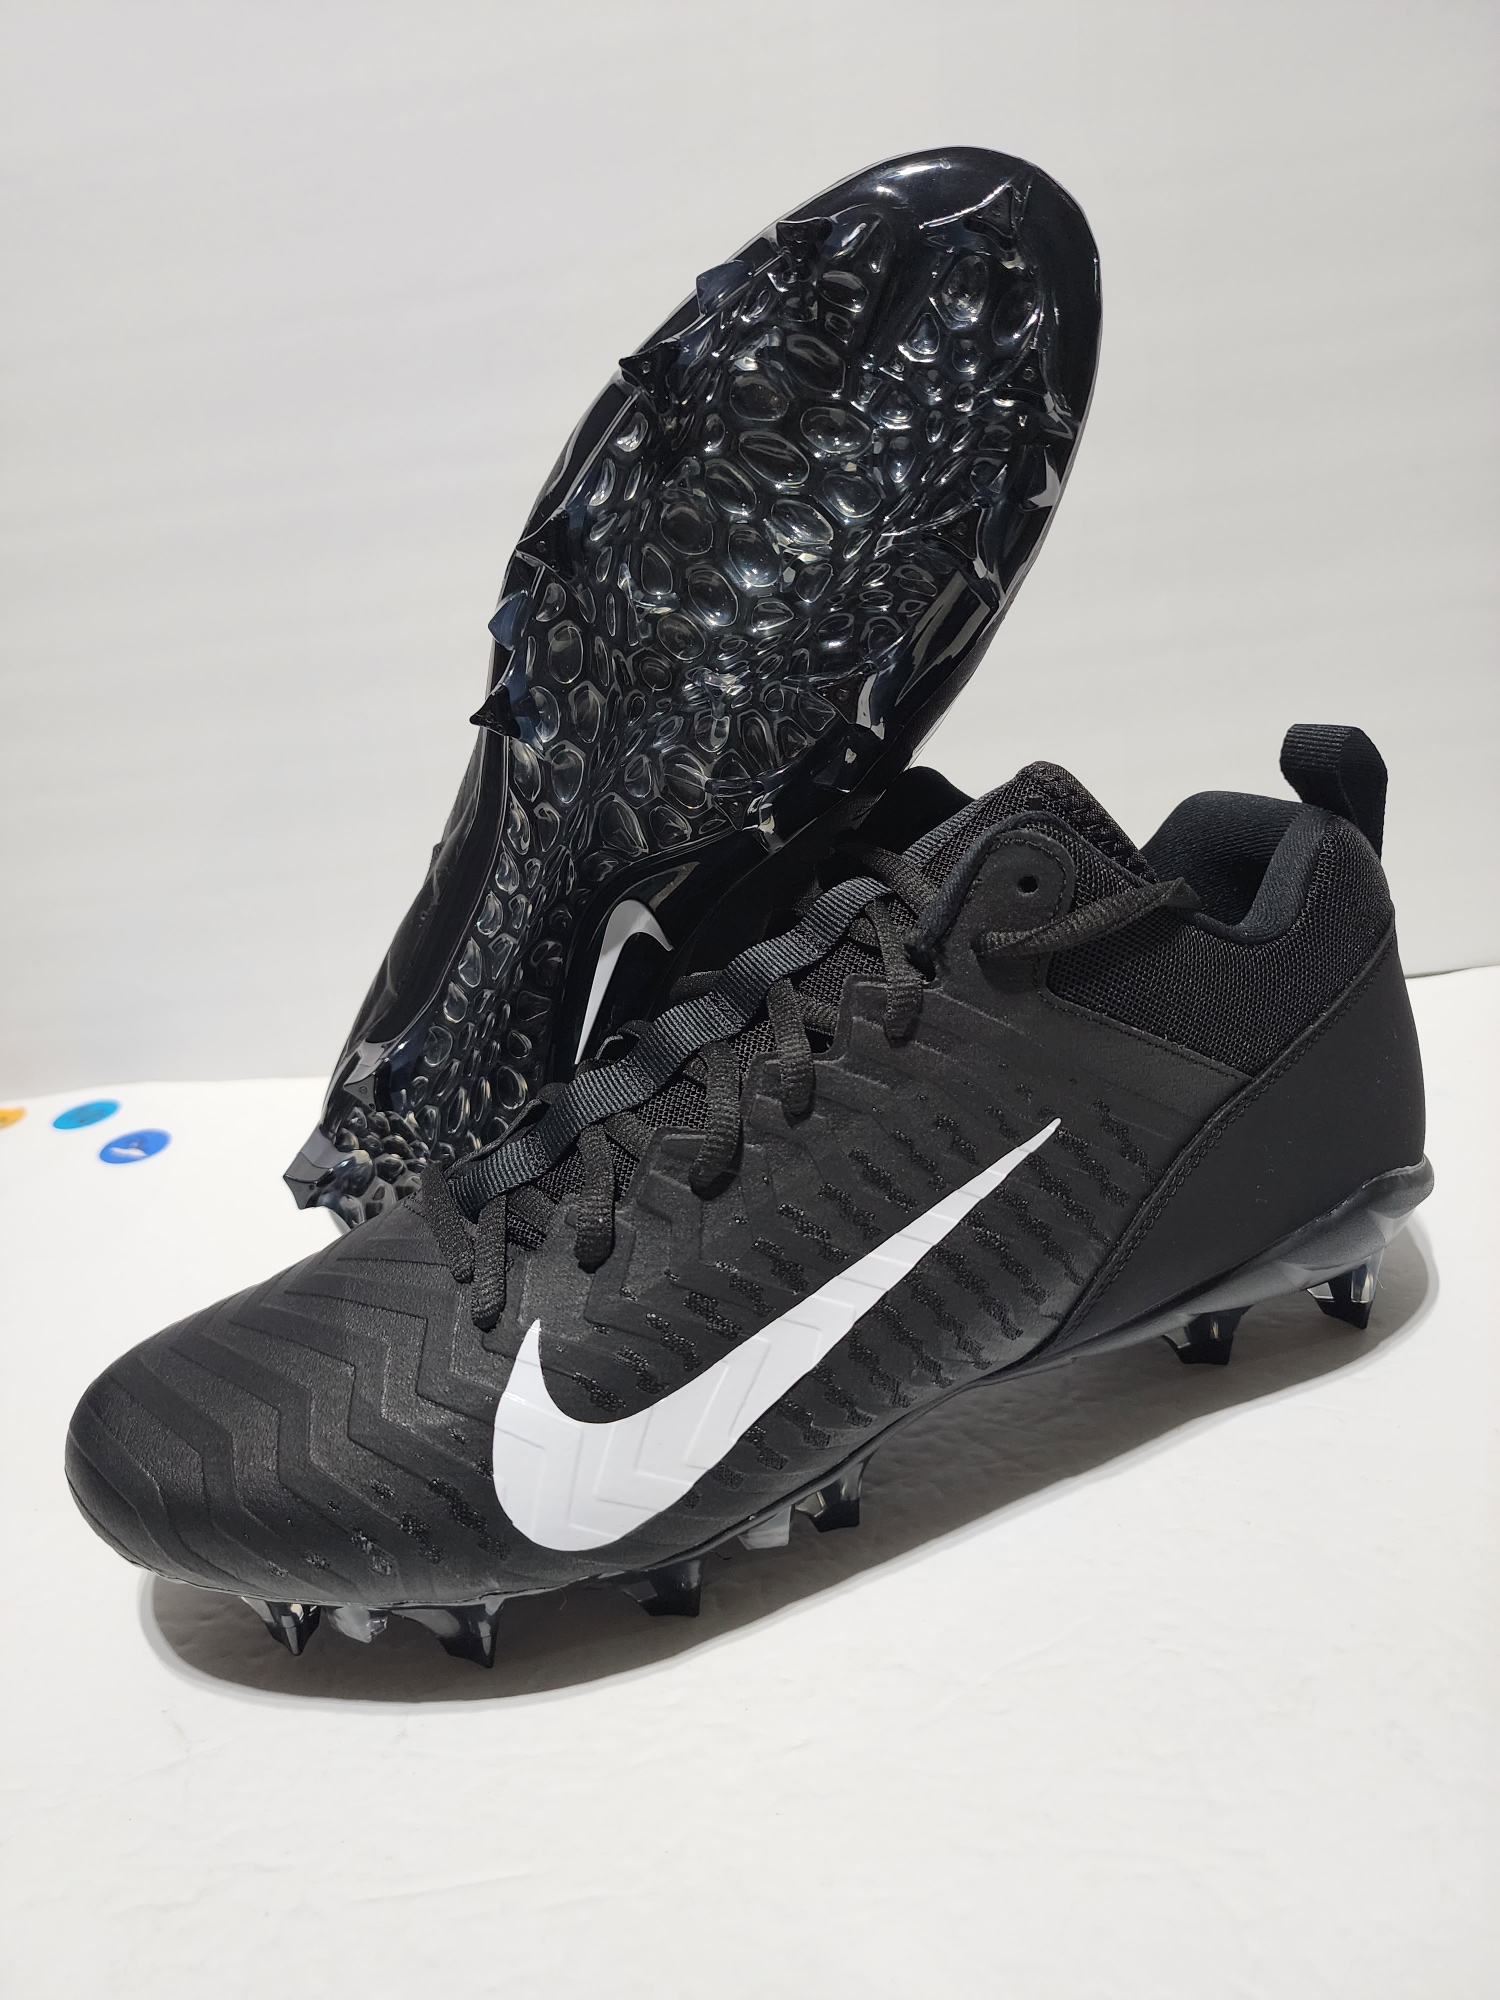 Nike Alpha Menace Pro 2 Low Football Cleats Black (CV6477-001) Men's Size 13.5